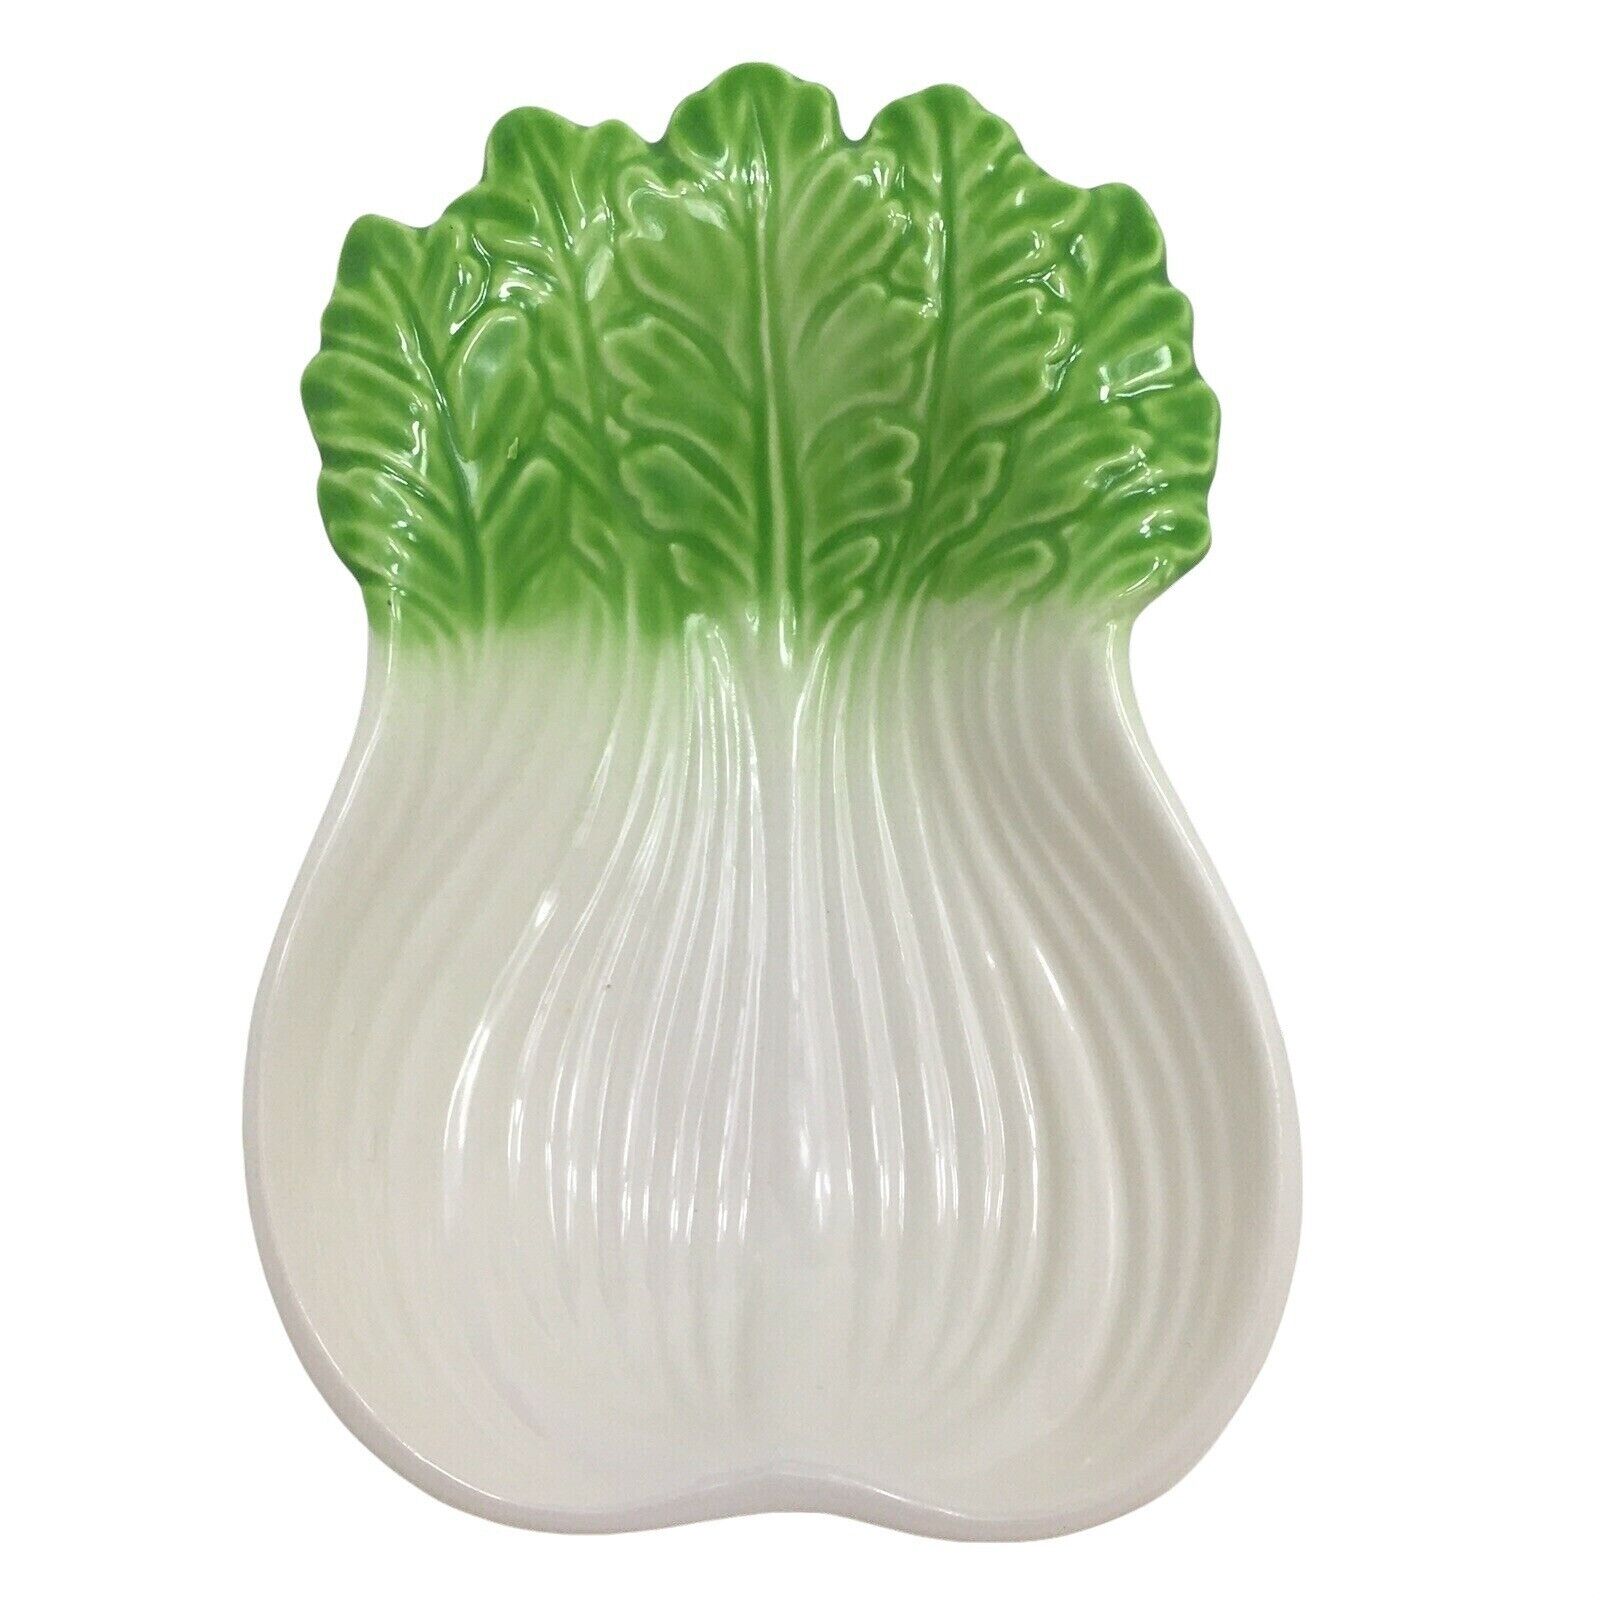 Celery Shaped Ceramic Dish Vintage Japan Vegetable Bok Choy Bowl Decor Display